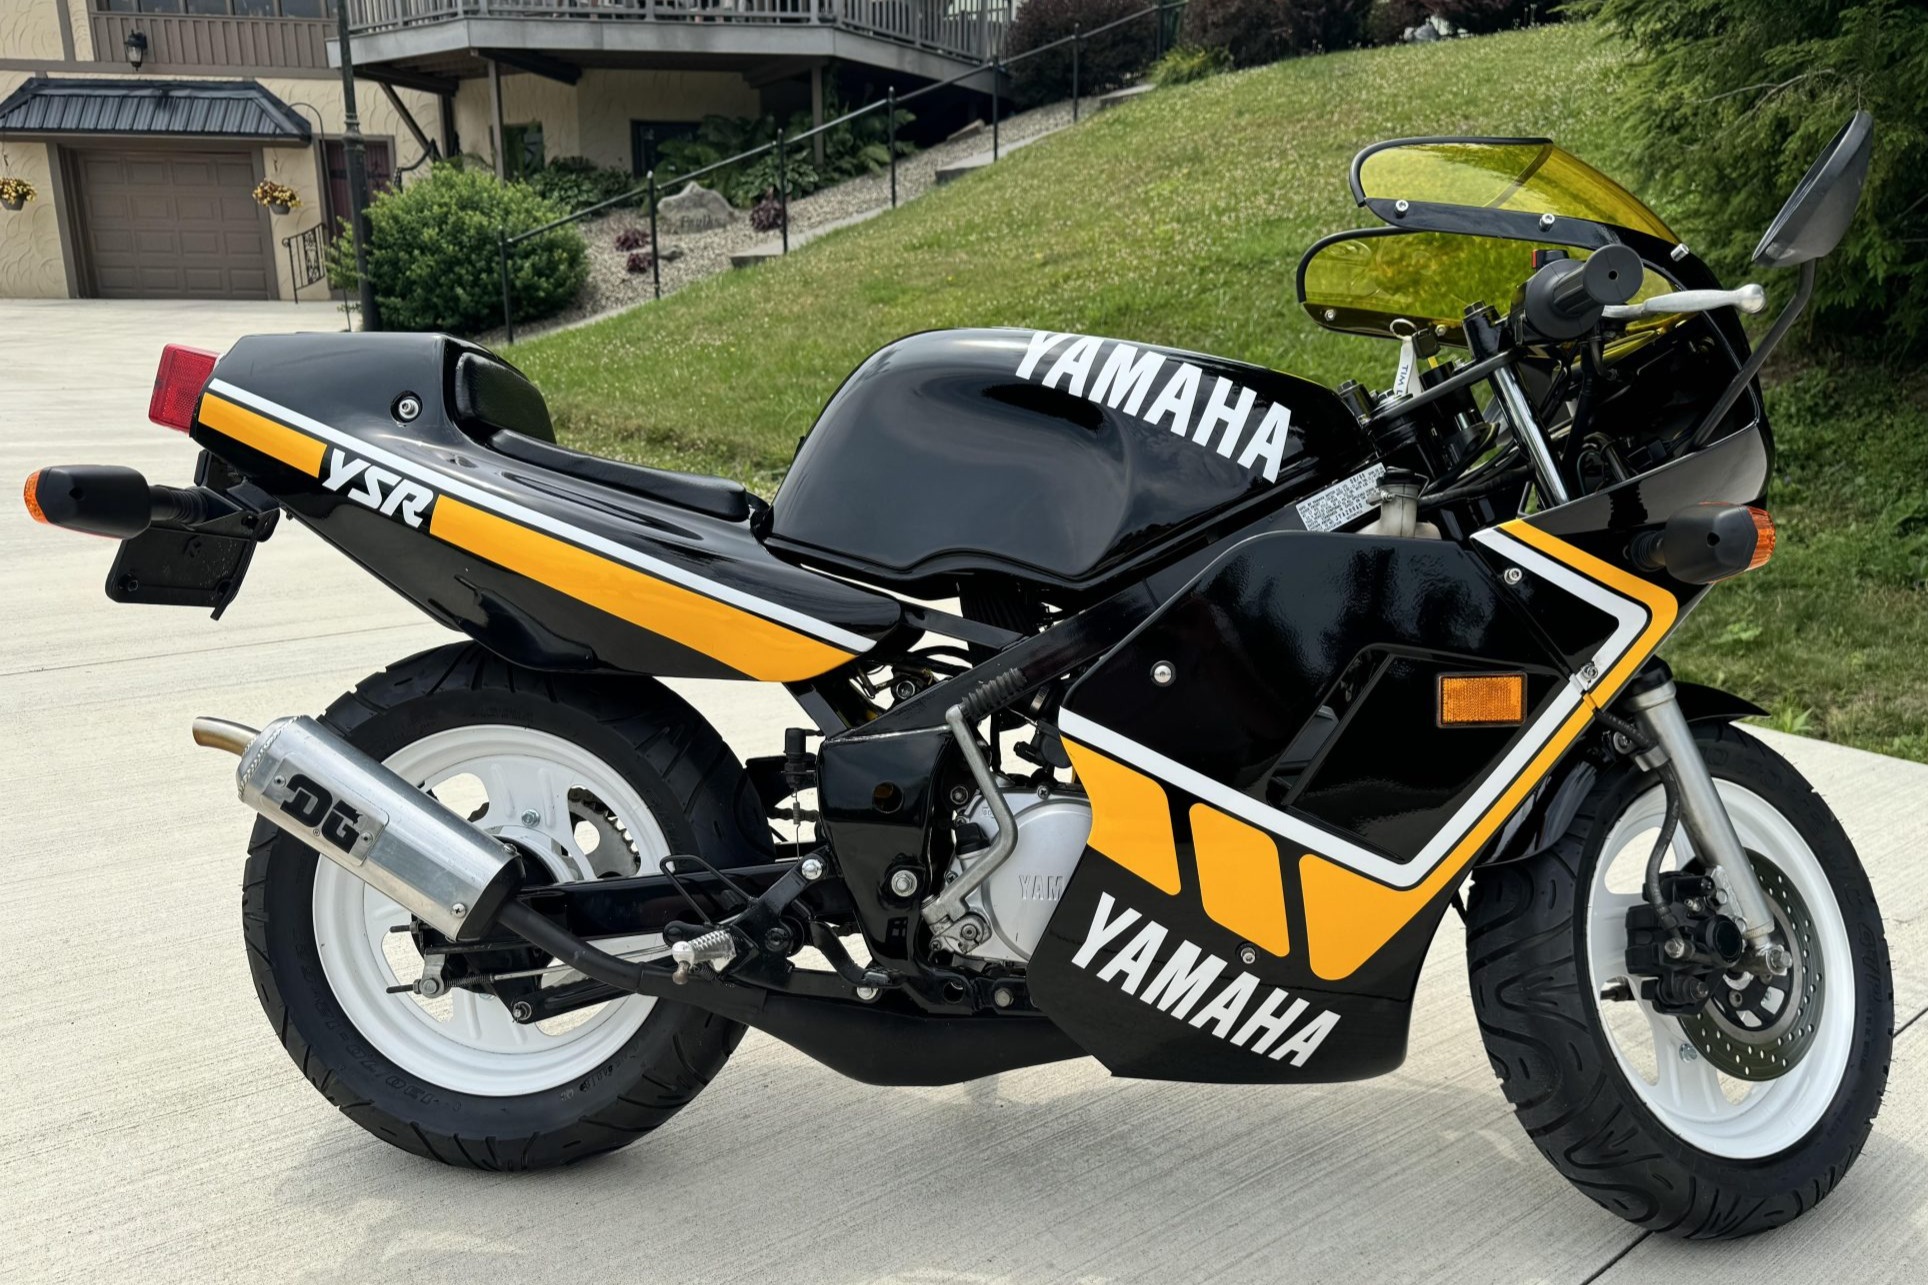 Used 1988 Yamaha YSR50 Review